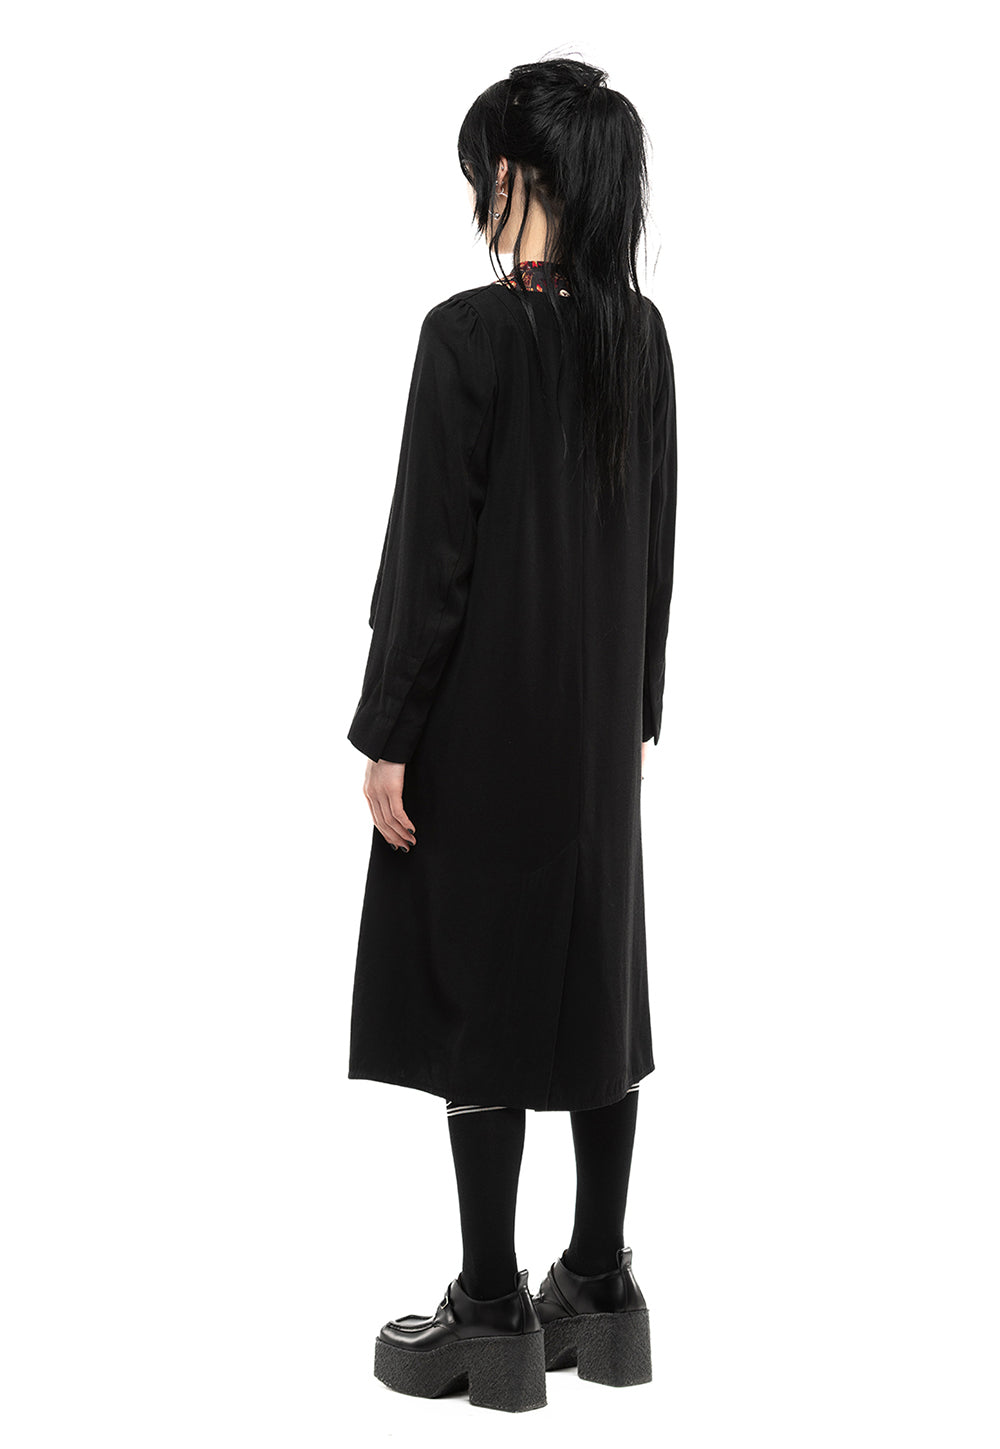 Hildegard Dress - Black sold by Angel Divine